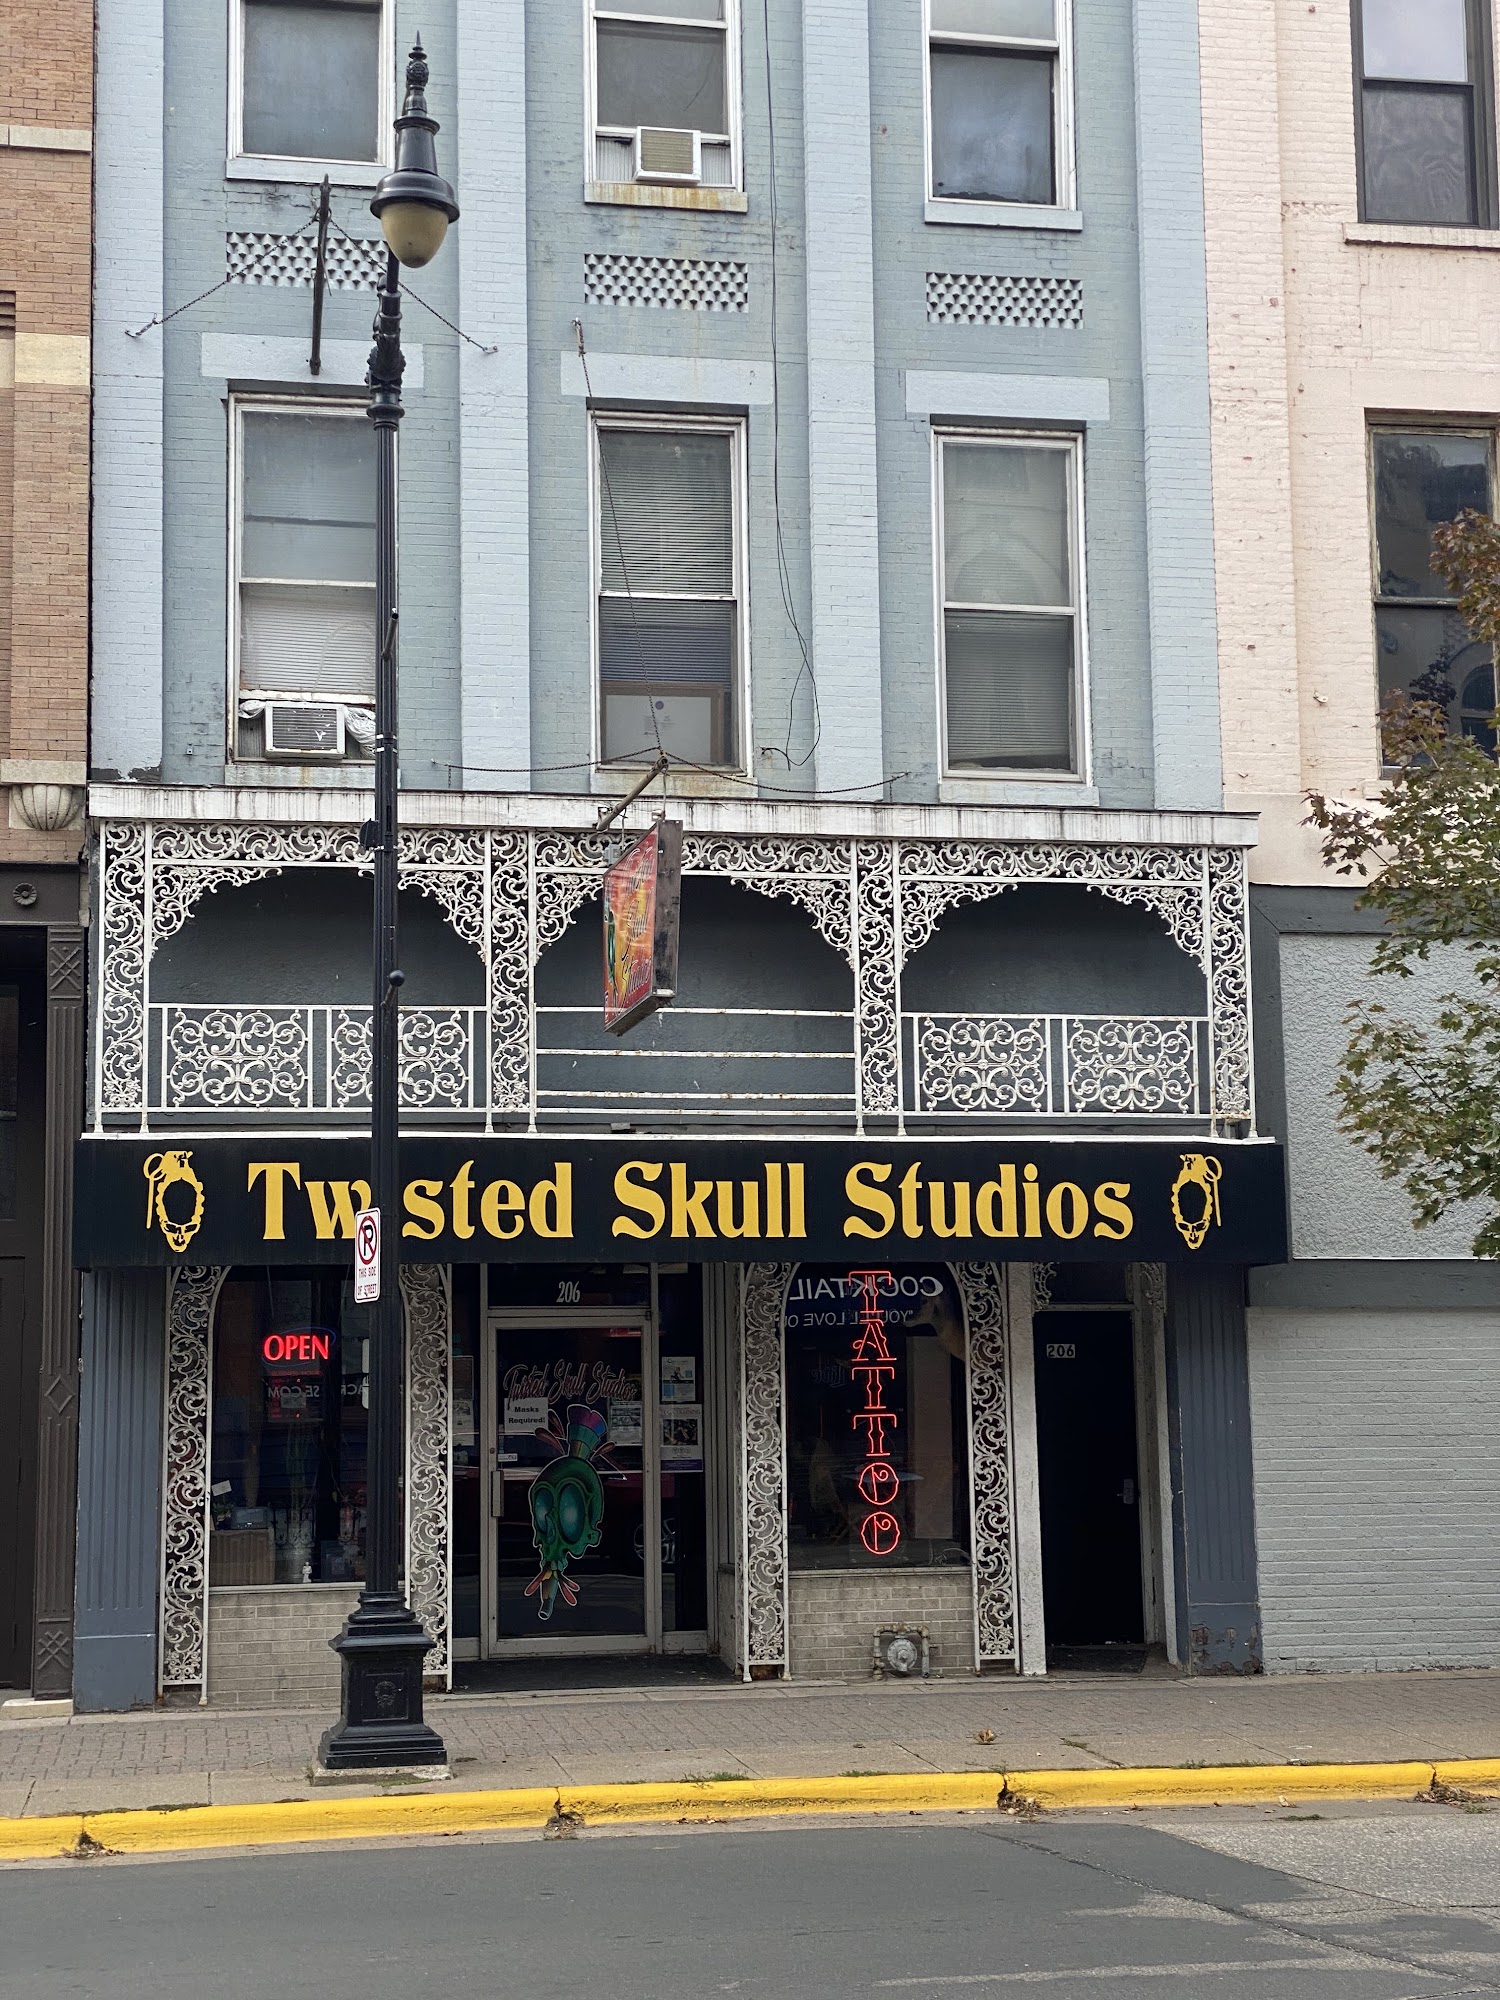 Twisted Skull Studios